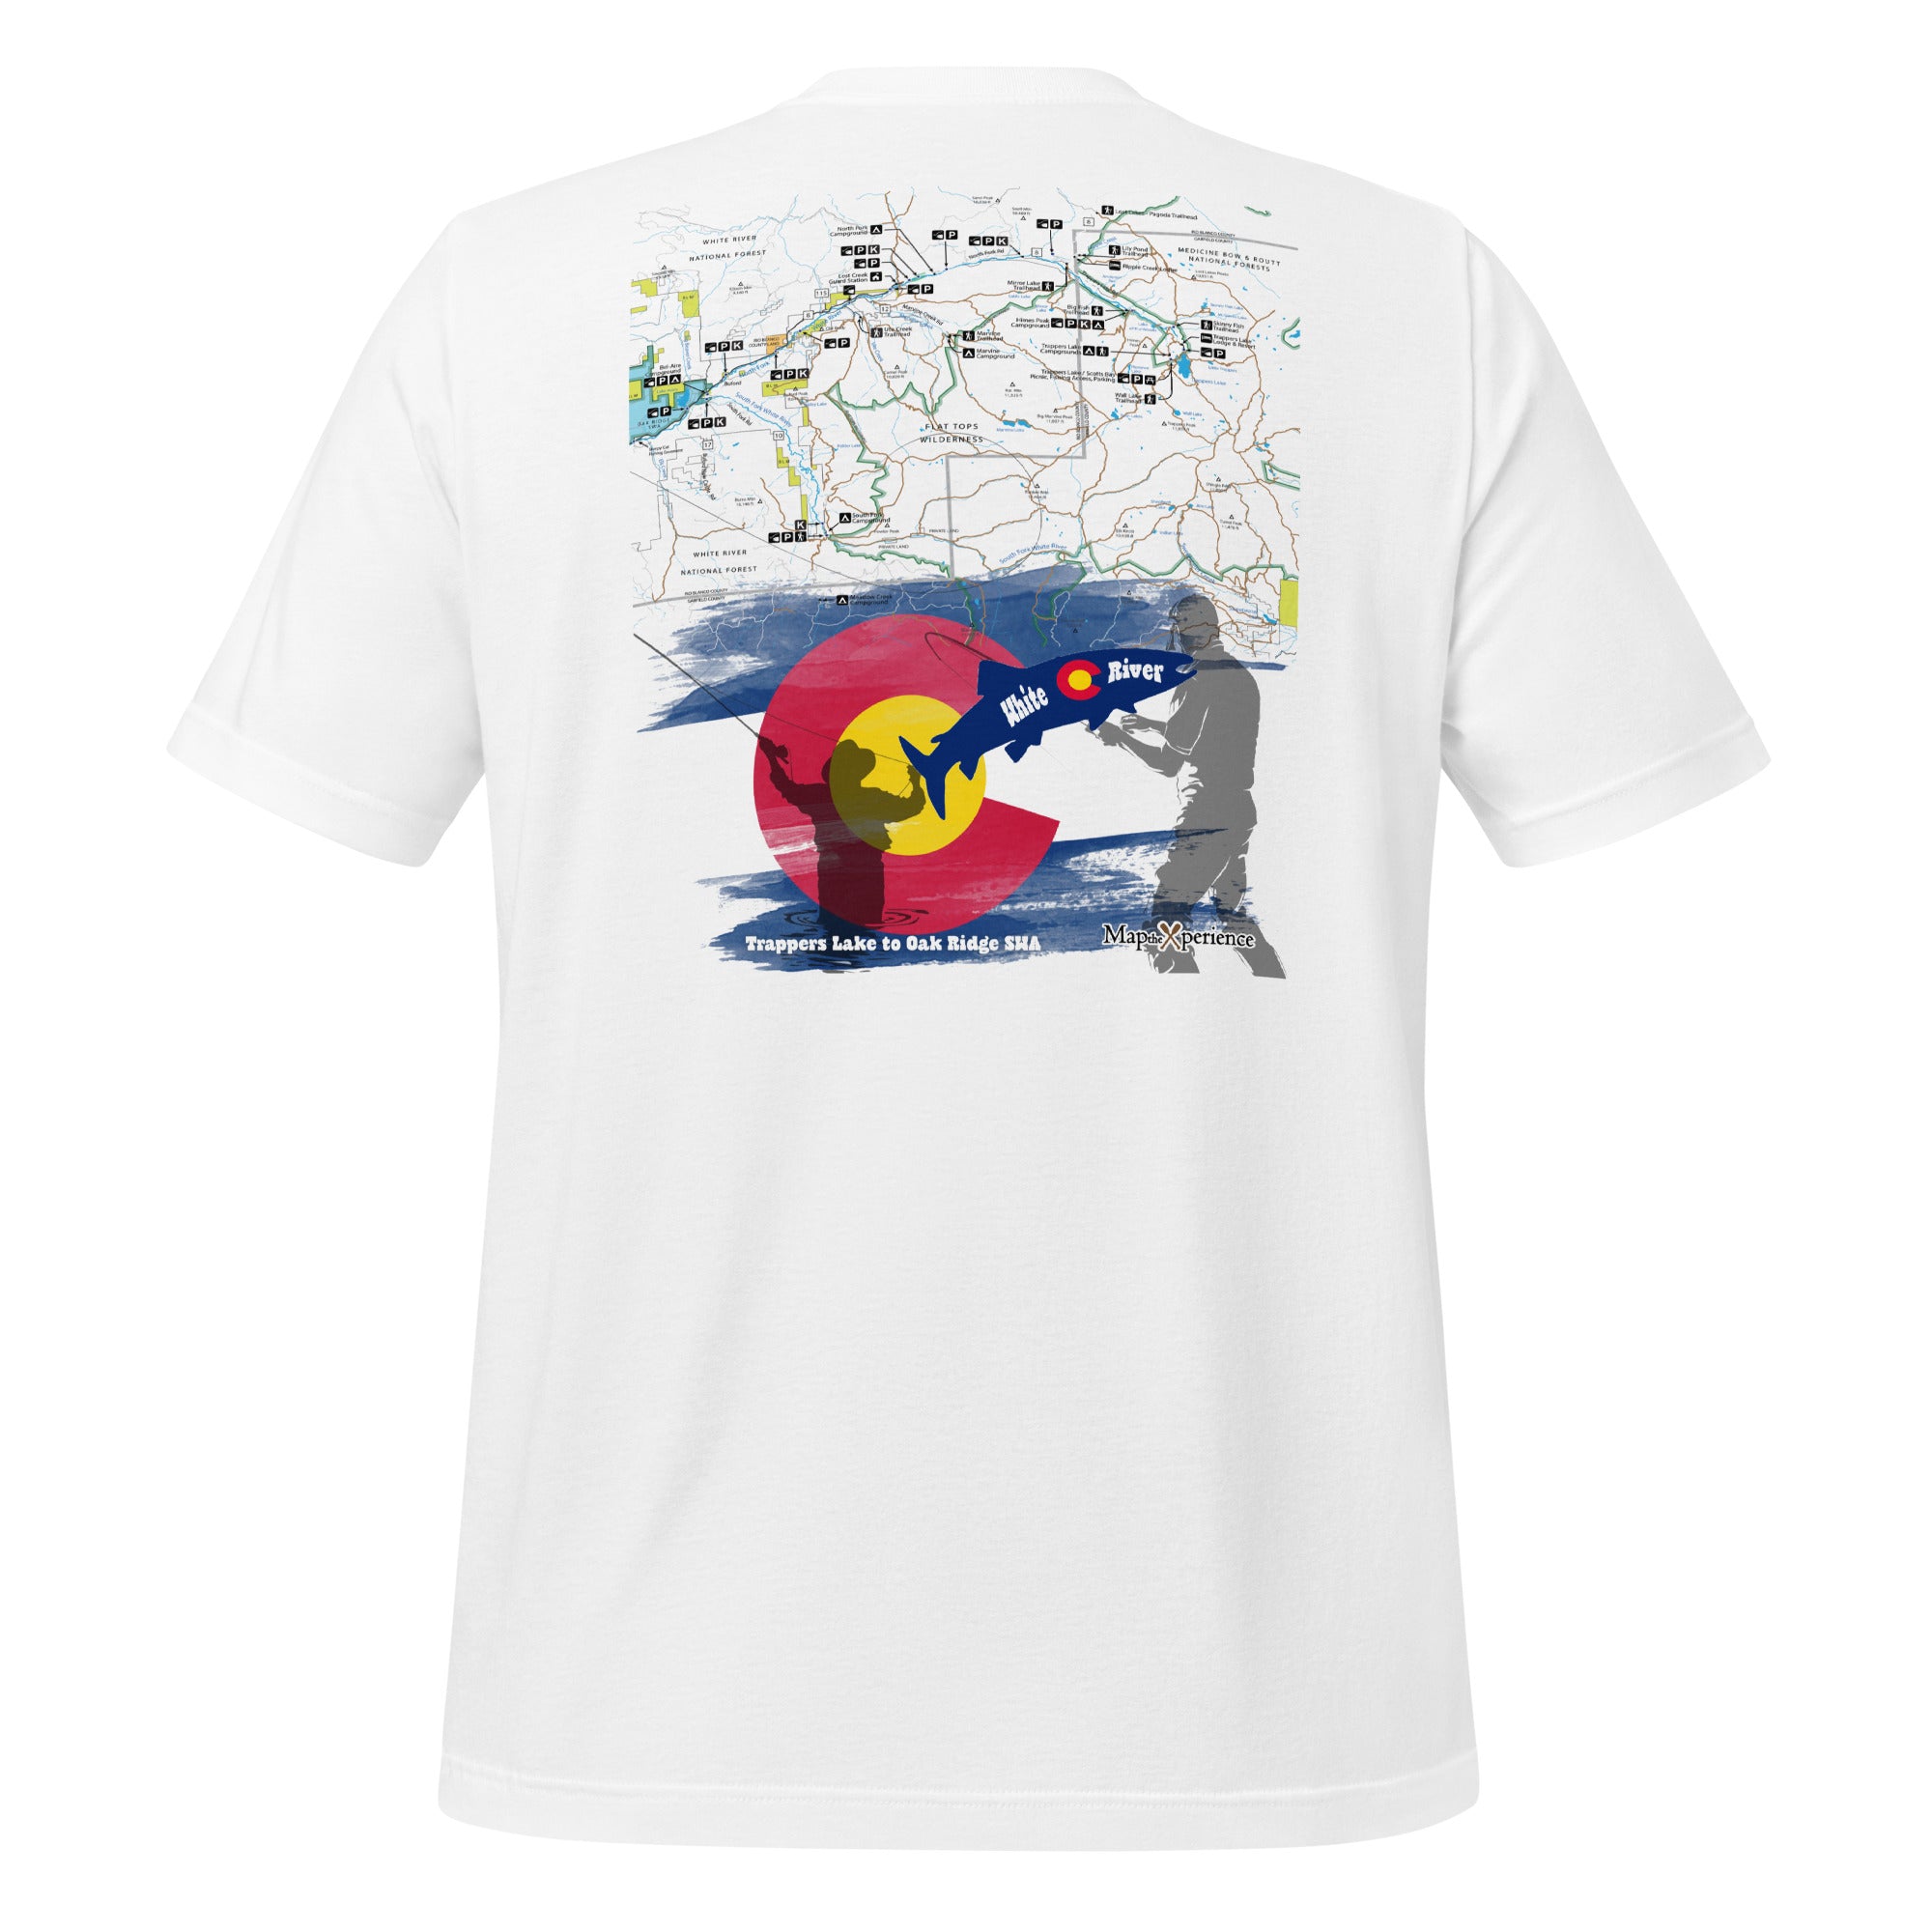 White River Upper, Colorado Performance T-shirt